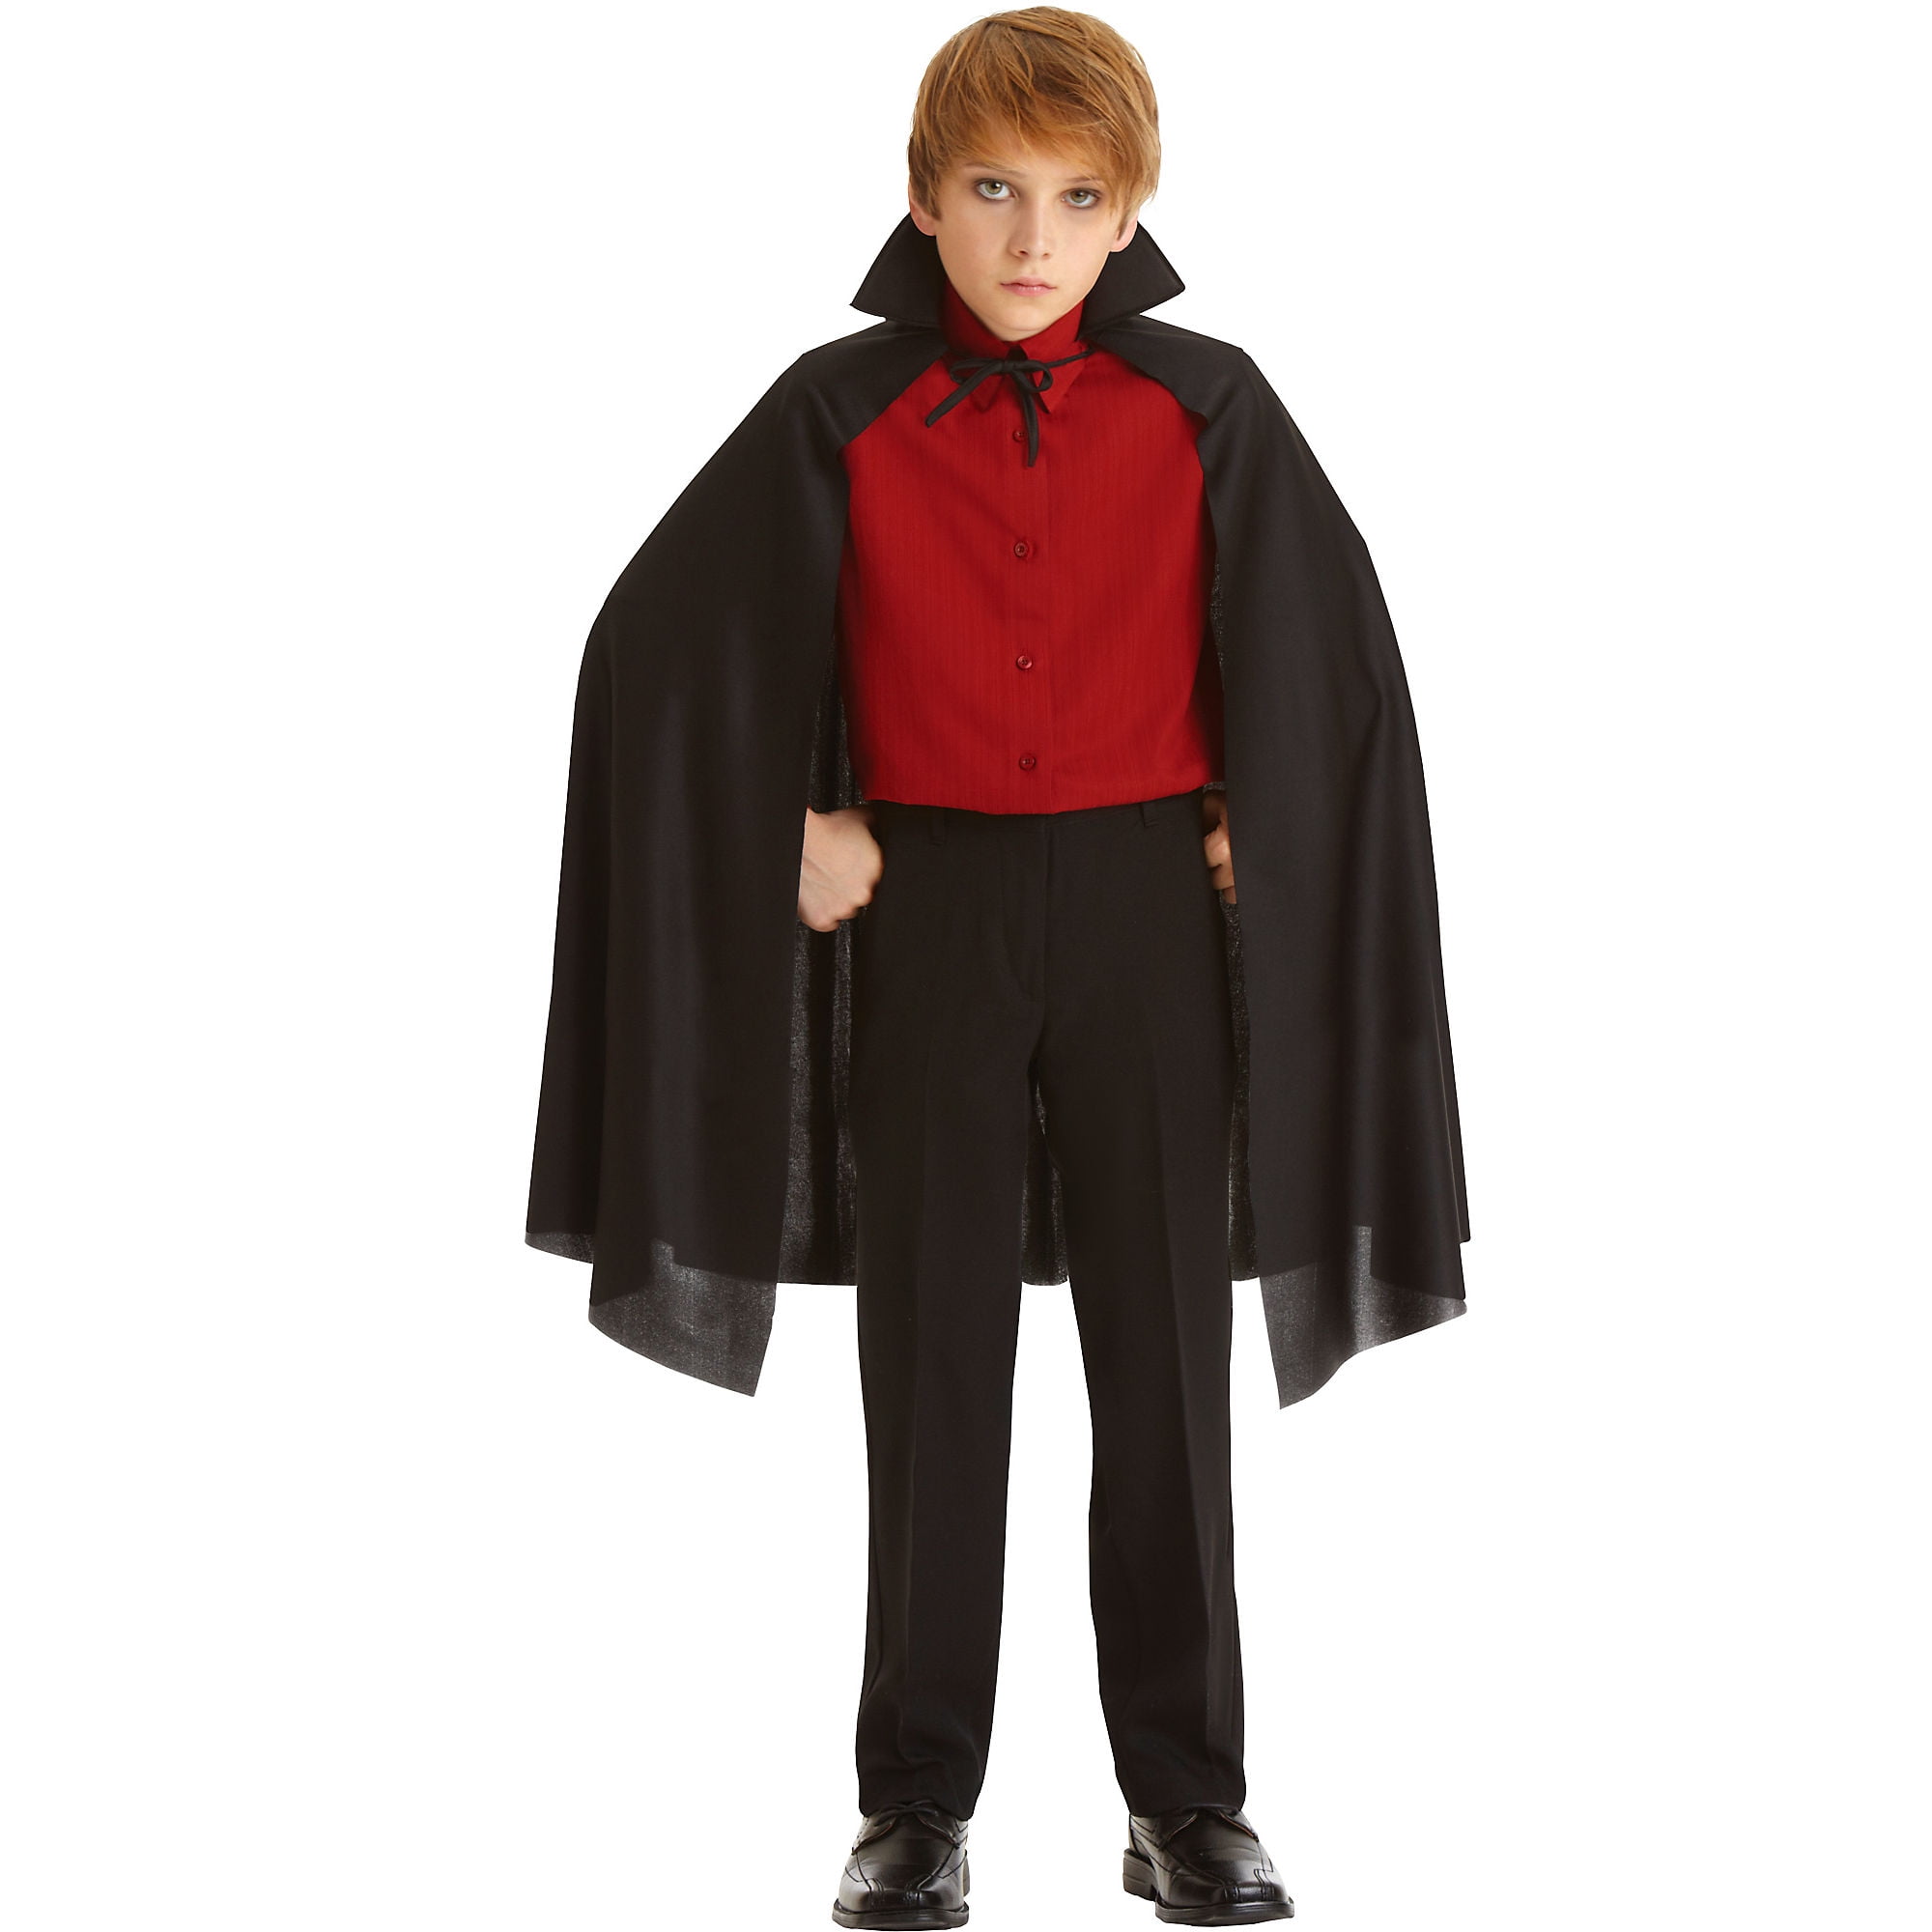 Child Cape with Collar Child Costume - Walmart.com